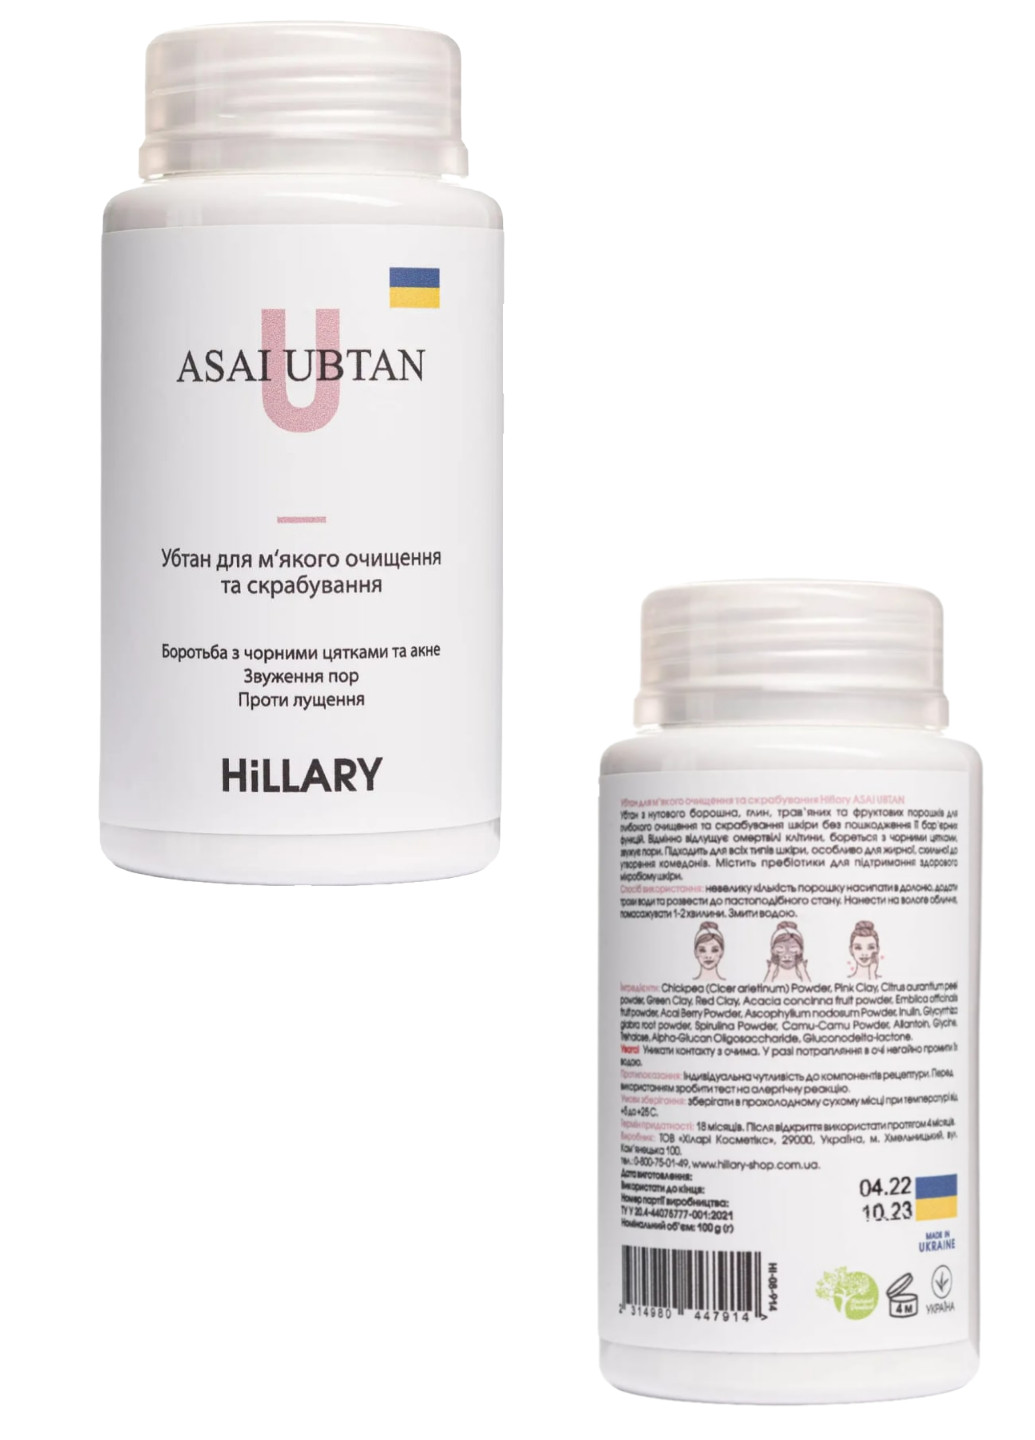 Базовый набор по уходу за жирной кожей Осенний уход Autumn care for oil skin Hillary (254230585)